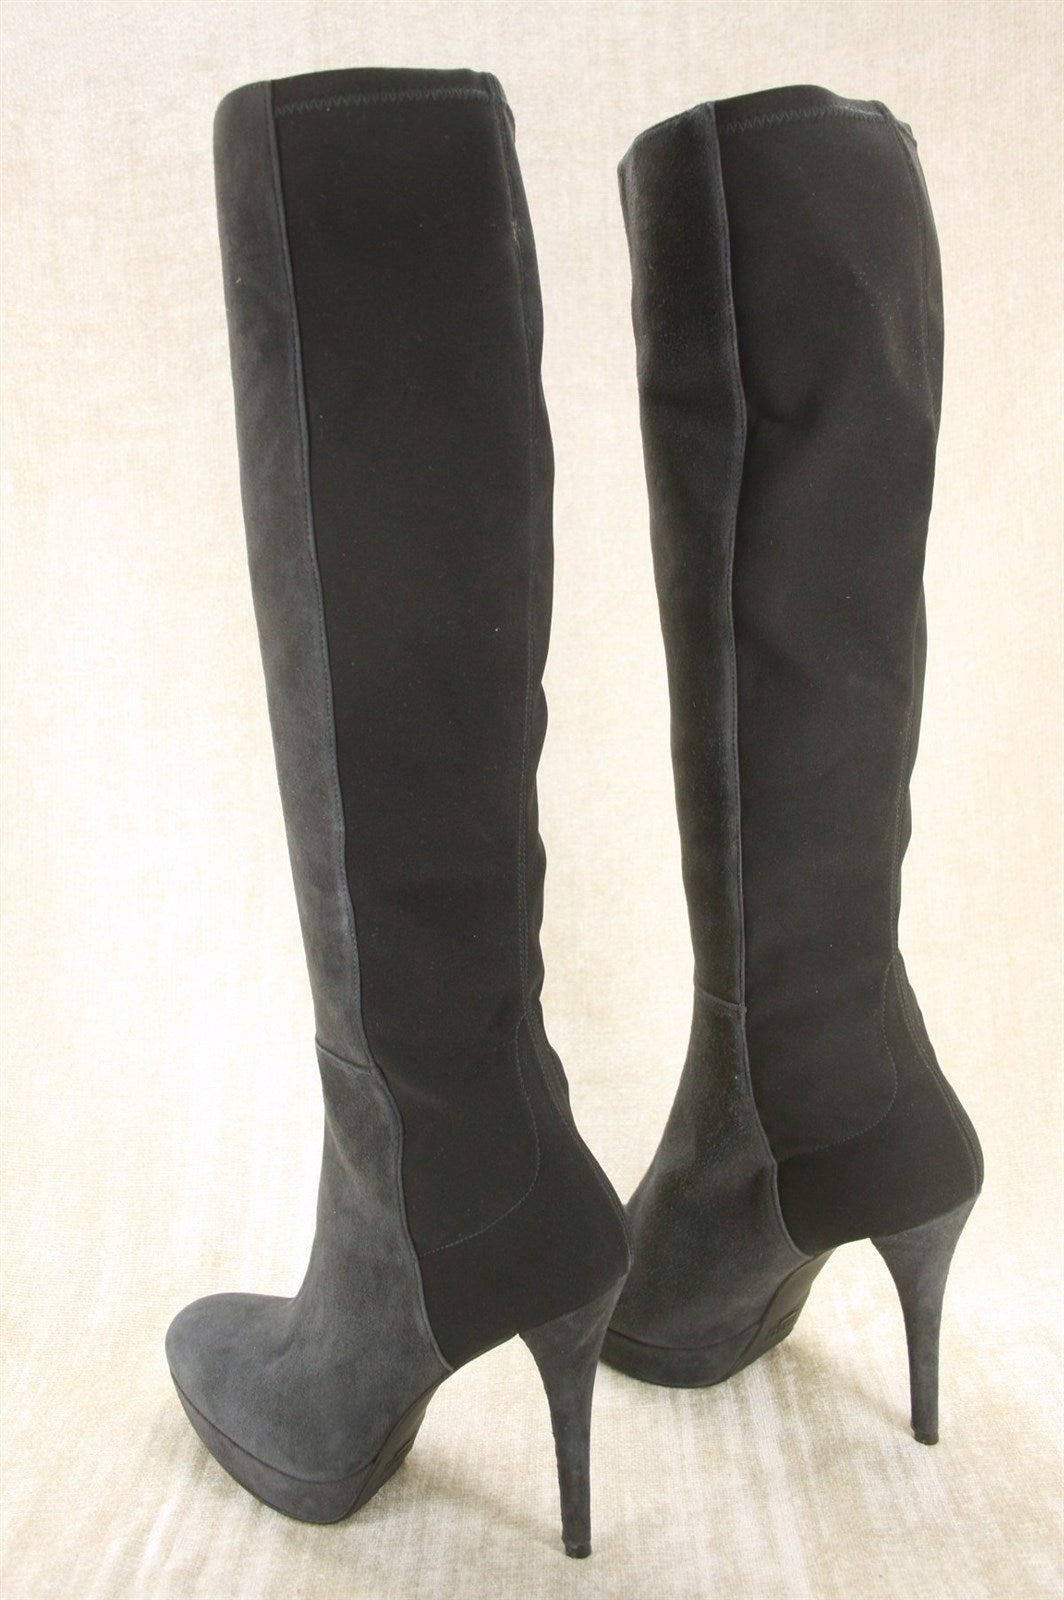 Stuart Weitzman Grey suede 'Skyline' High Heels Tall Boots SZ 10.5 NEW $695 5050